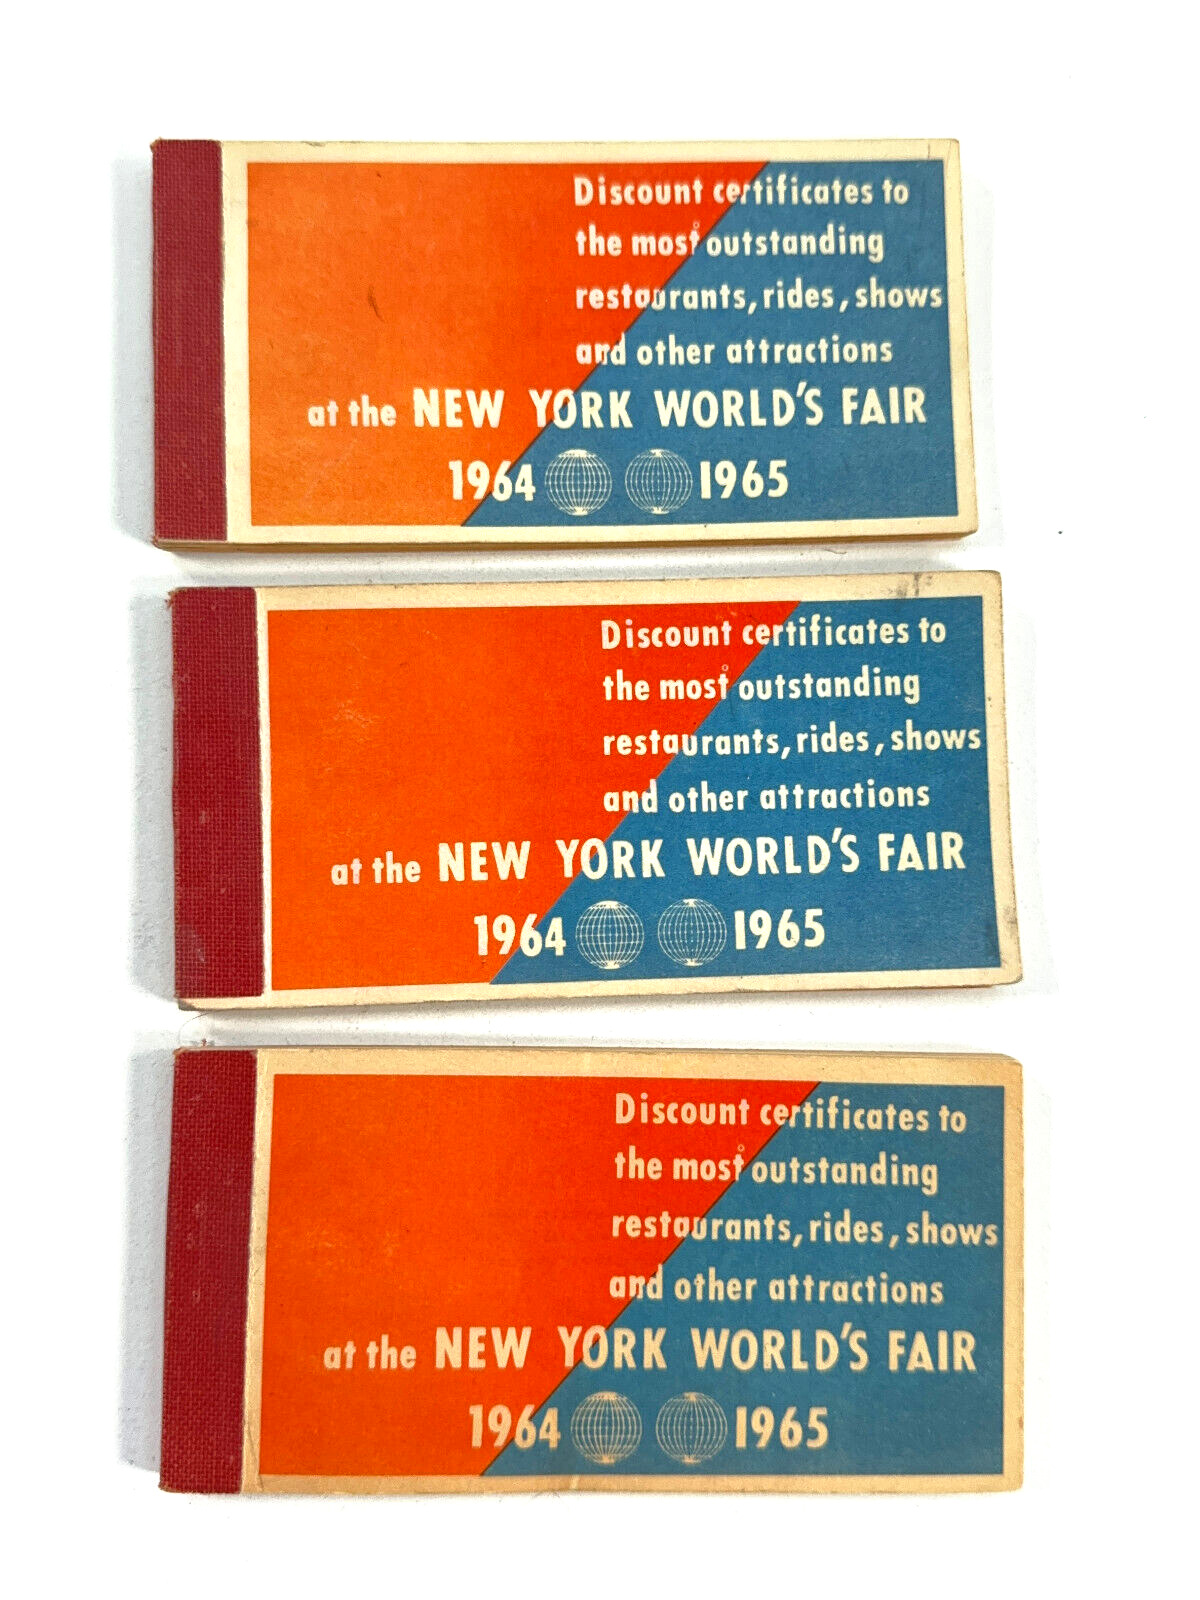 vtg 1964 1965 New York World's Fair coupon book (x3) lot